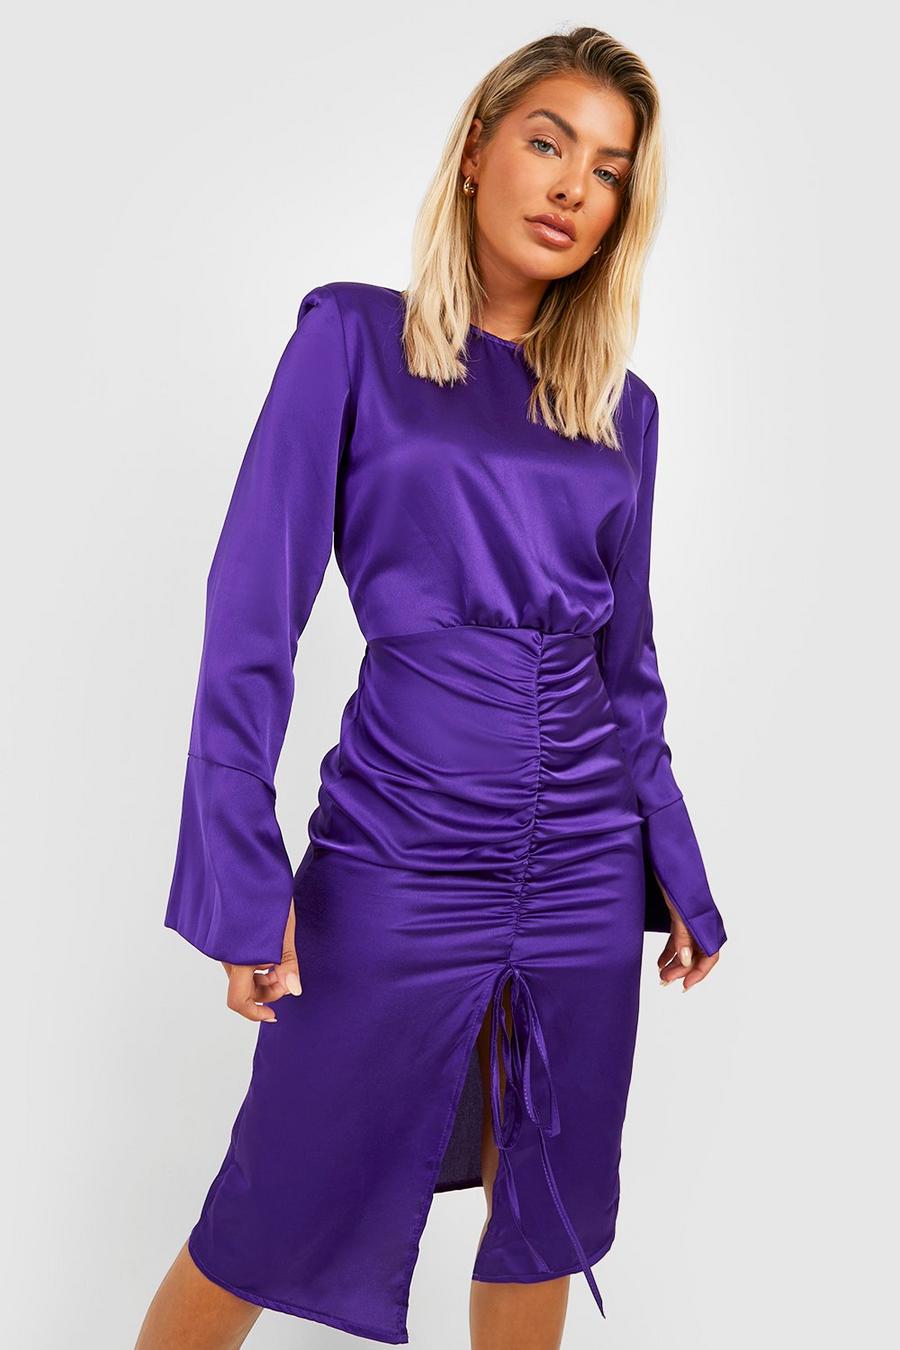 Jewel purple Satin Shoulder Pad Rouched Midi Dress image number 1